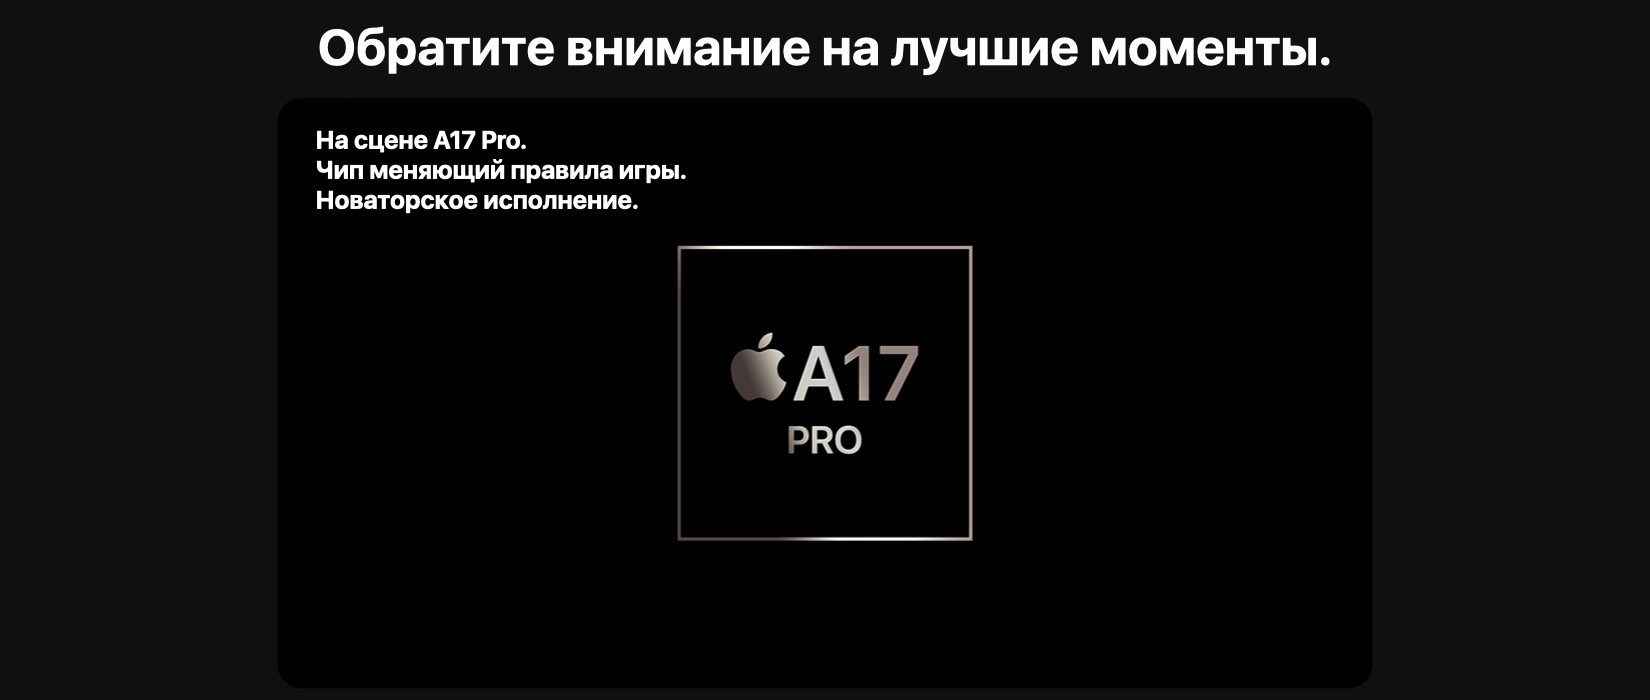 iPhone 15 Pro